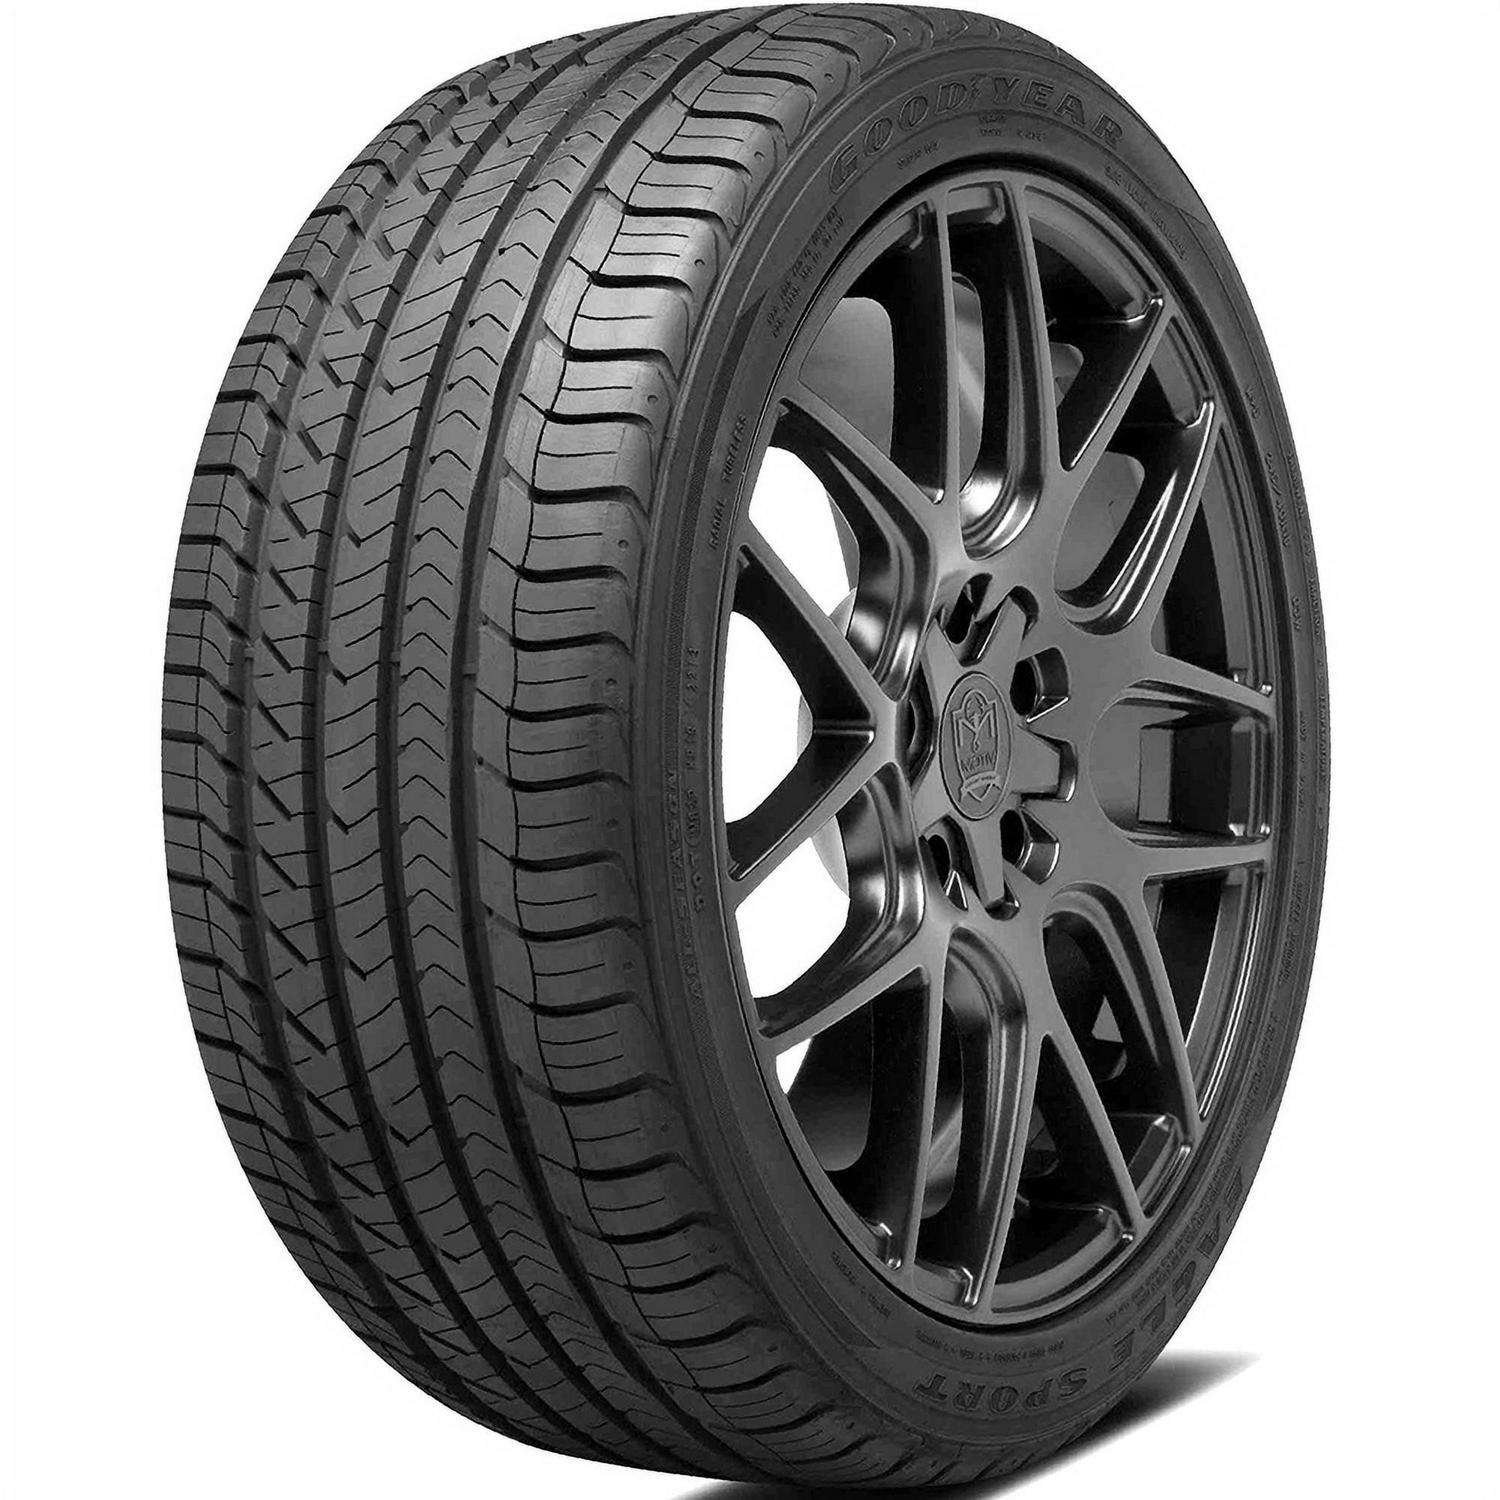 Goodyear Eagle Sport All-Season 235/50R19 99H (AO) A/S Performance Tire